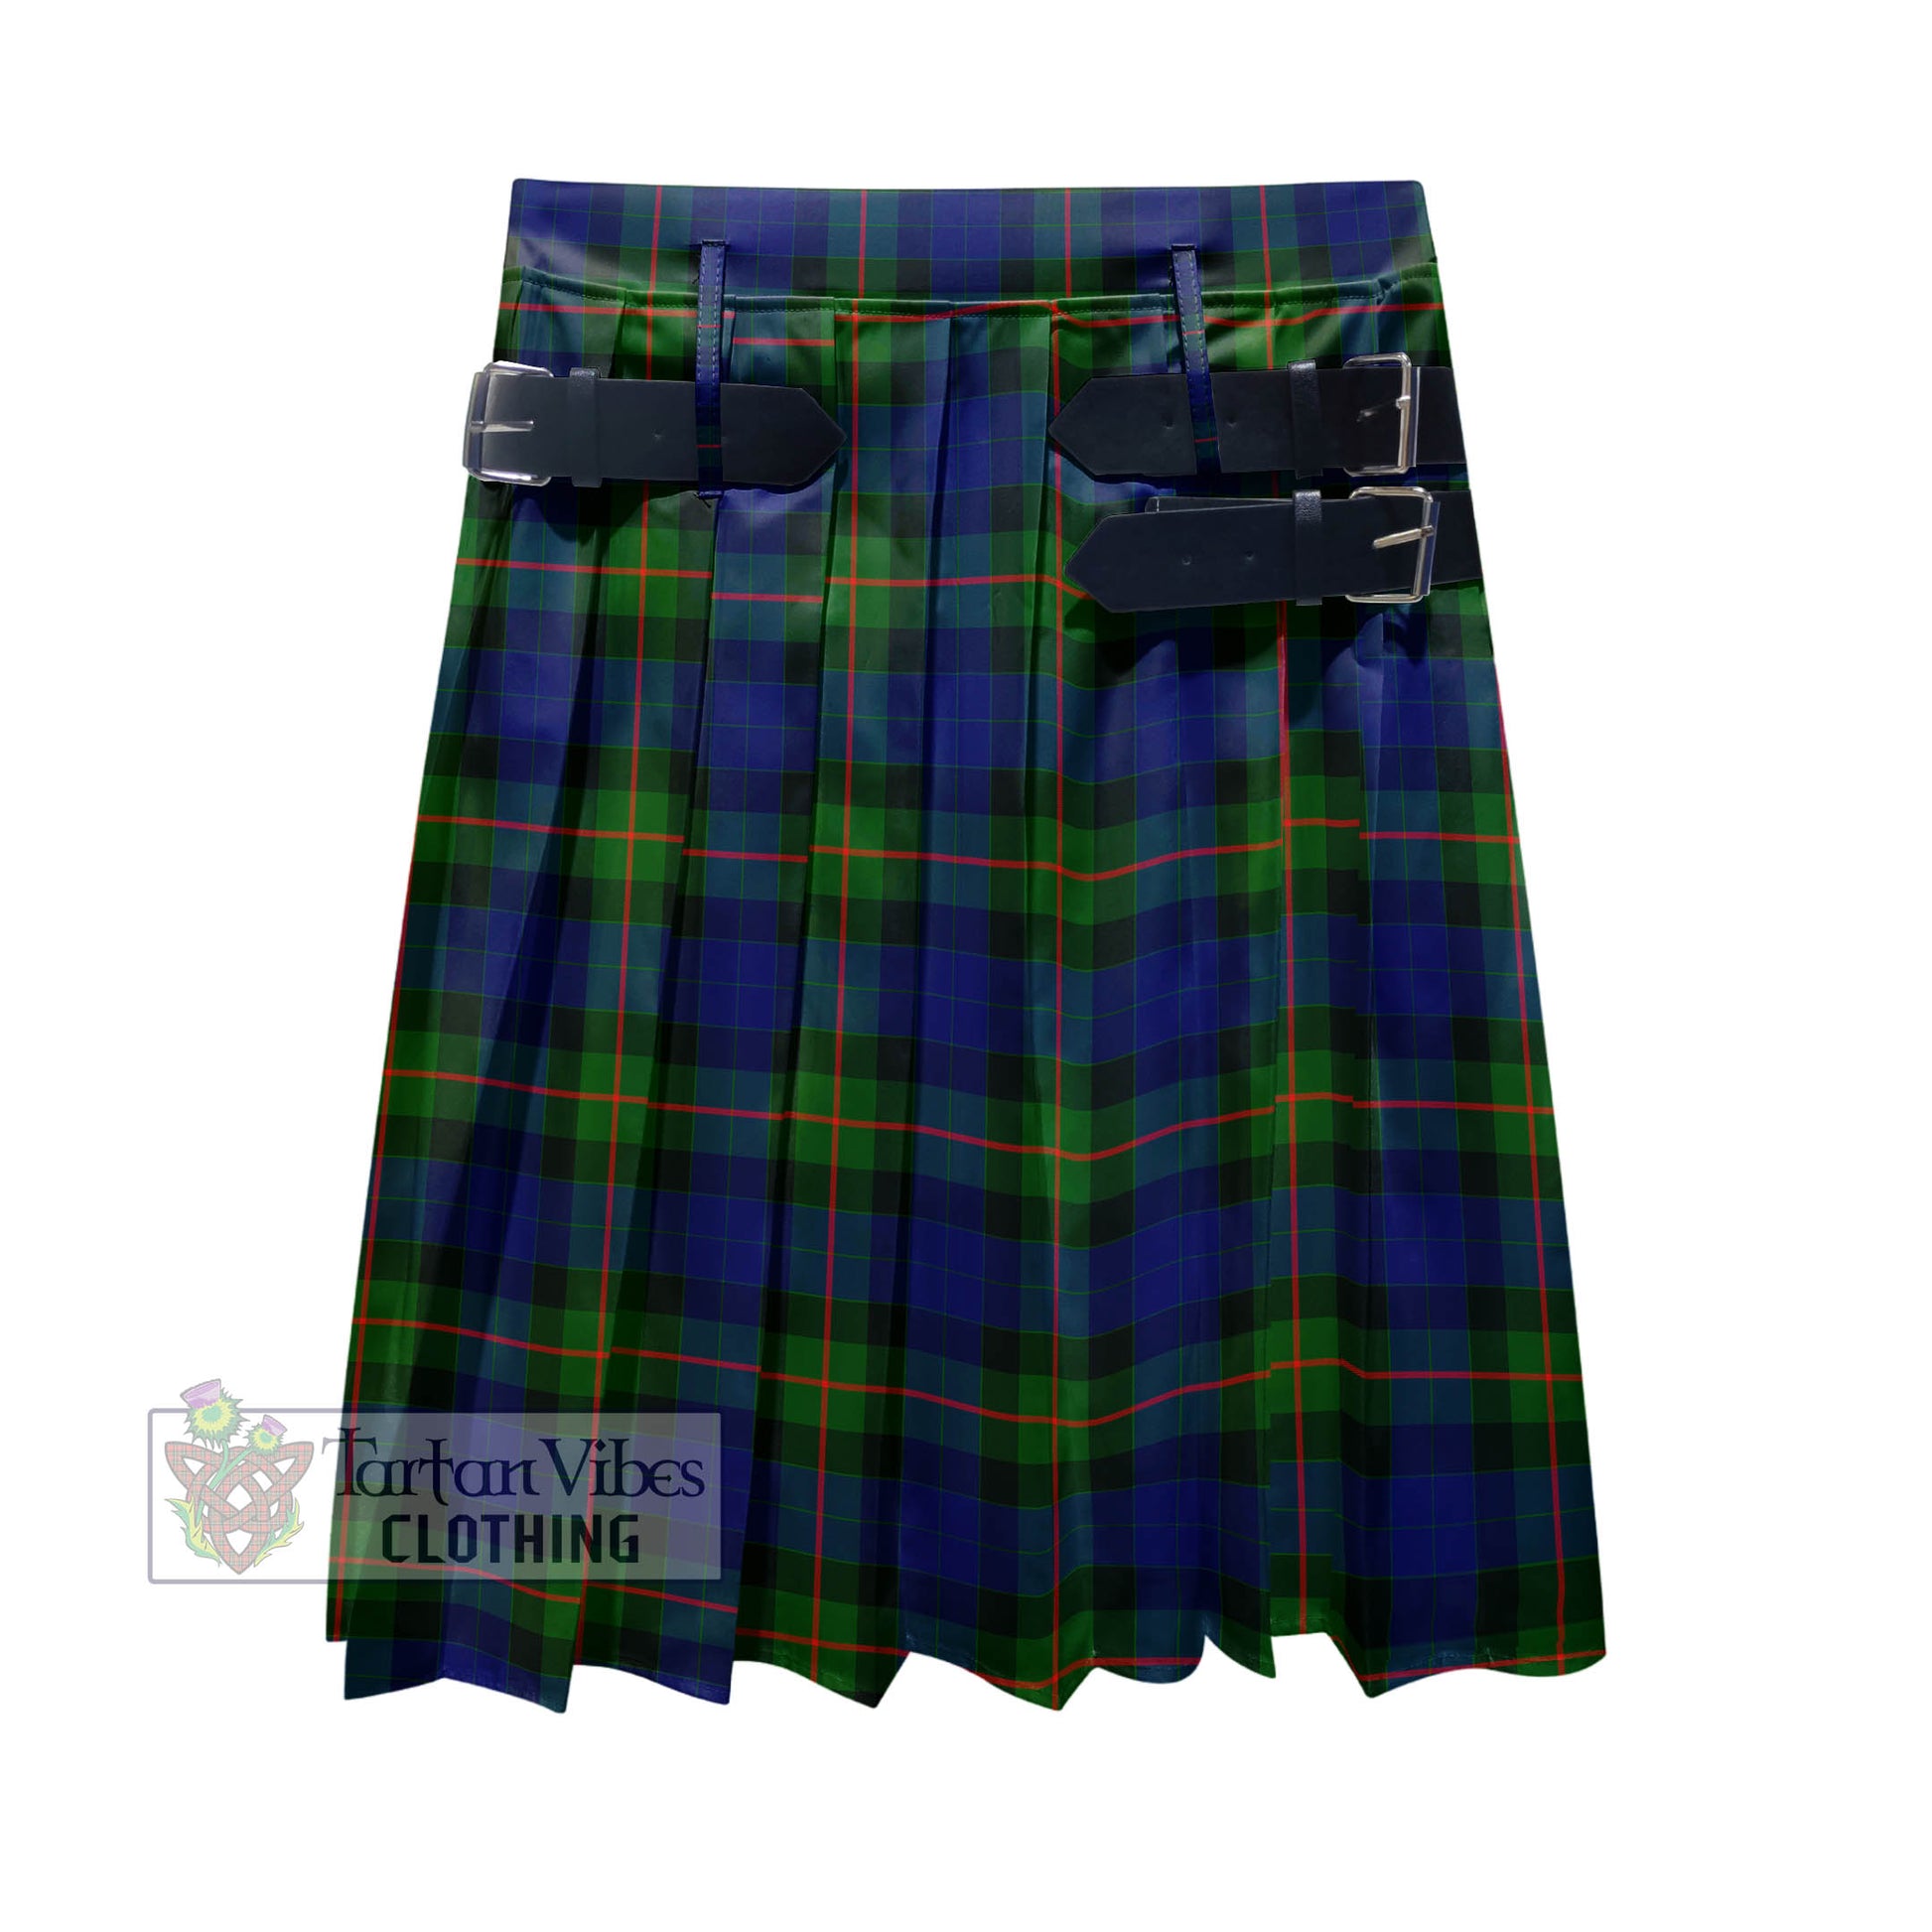 Tartan Vibes Clothing Jamieson Tartan Men's Pleated Skirt - Fashion Casual Retro Scottish Style